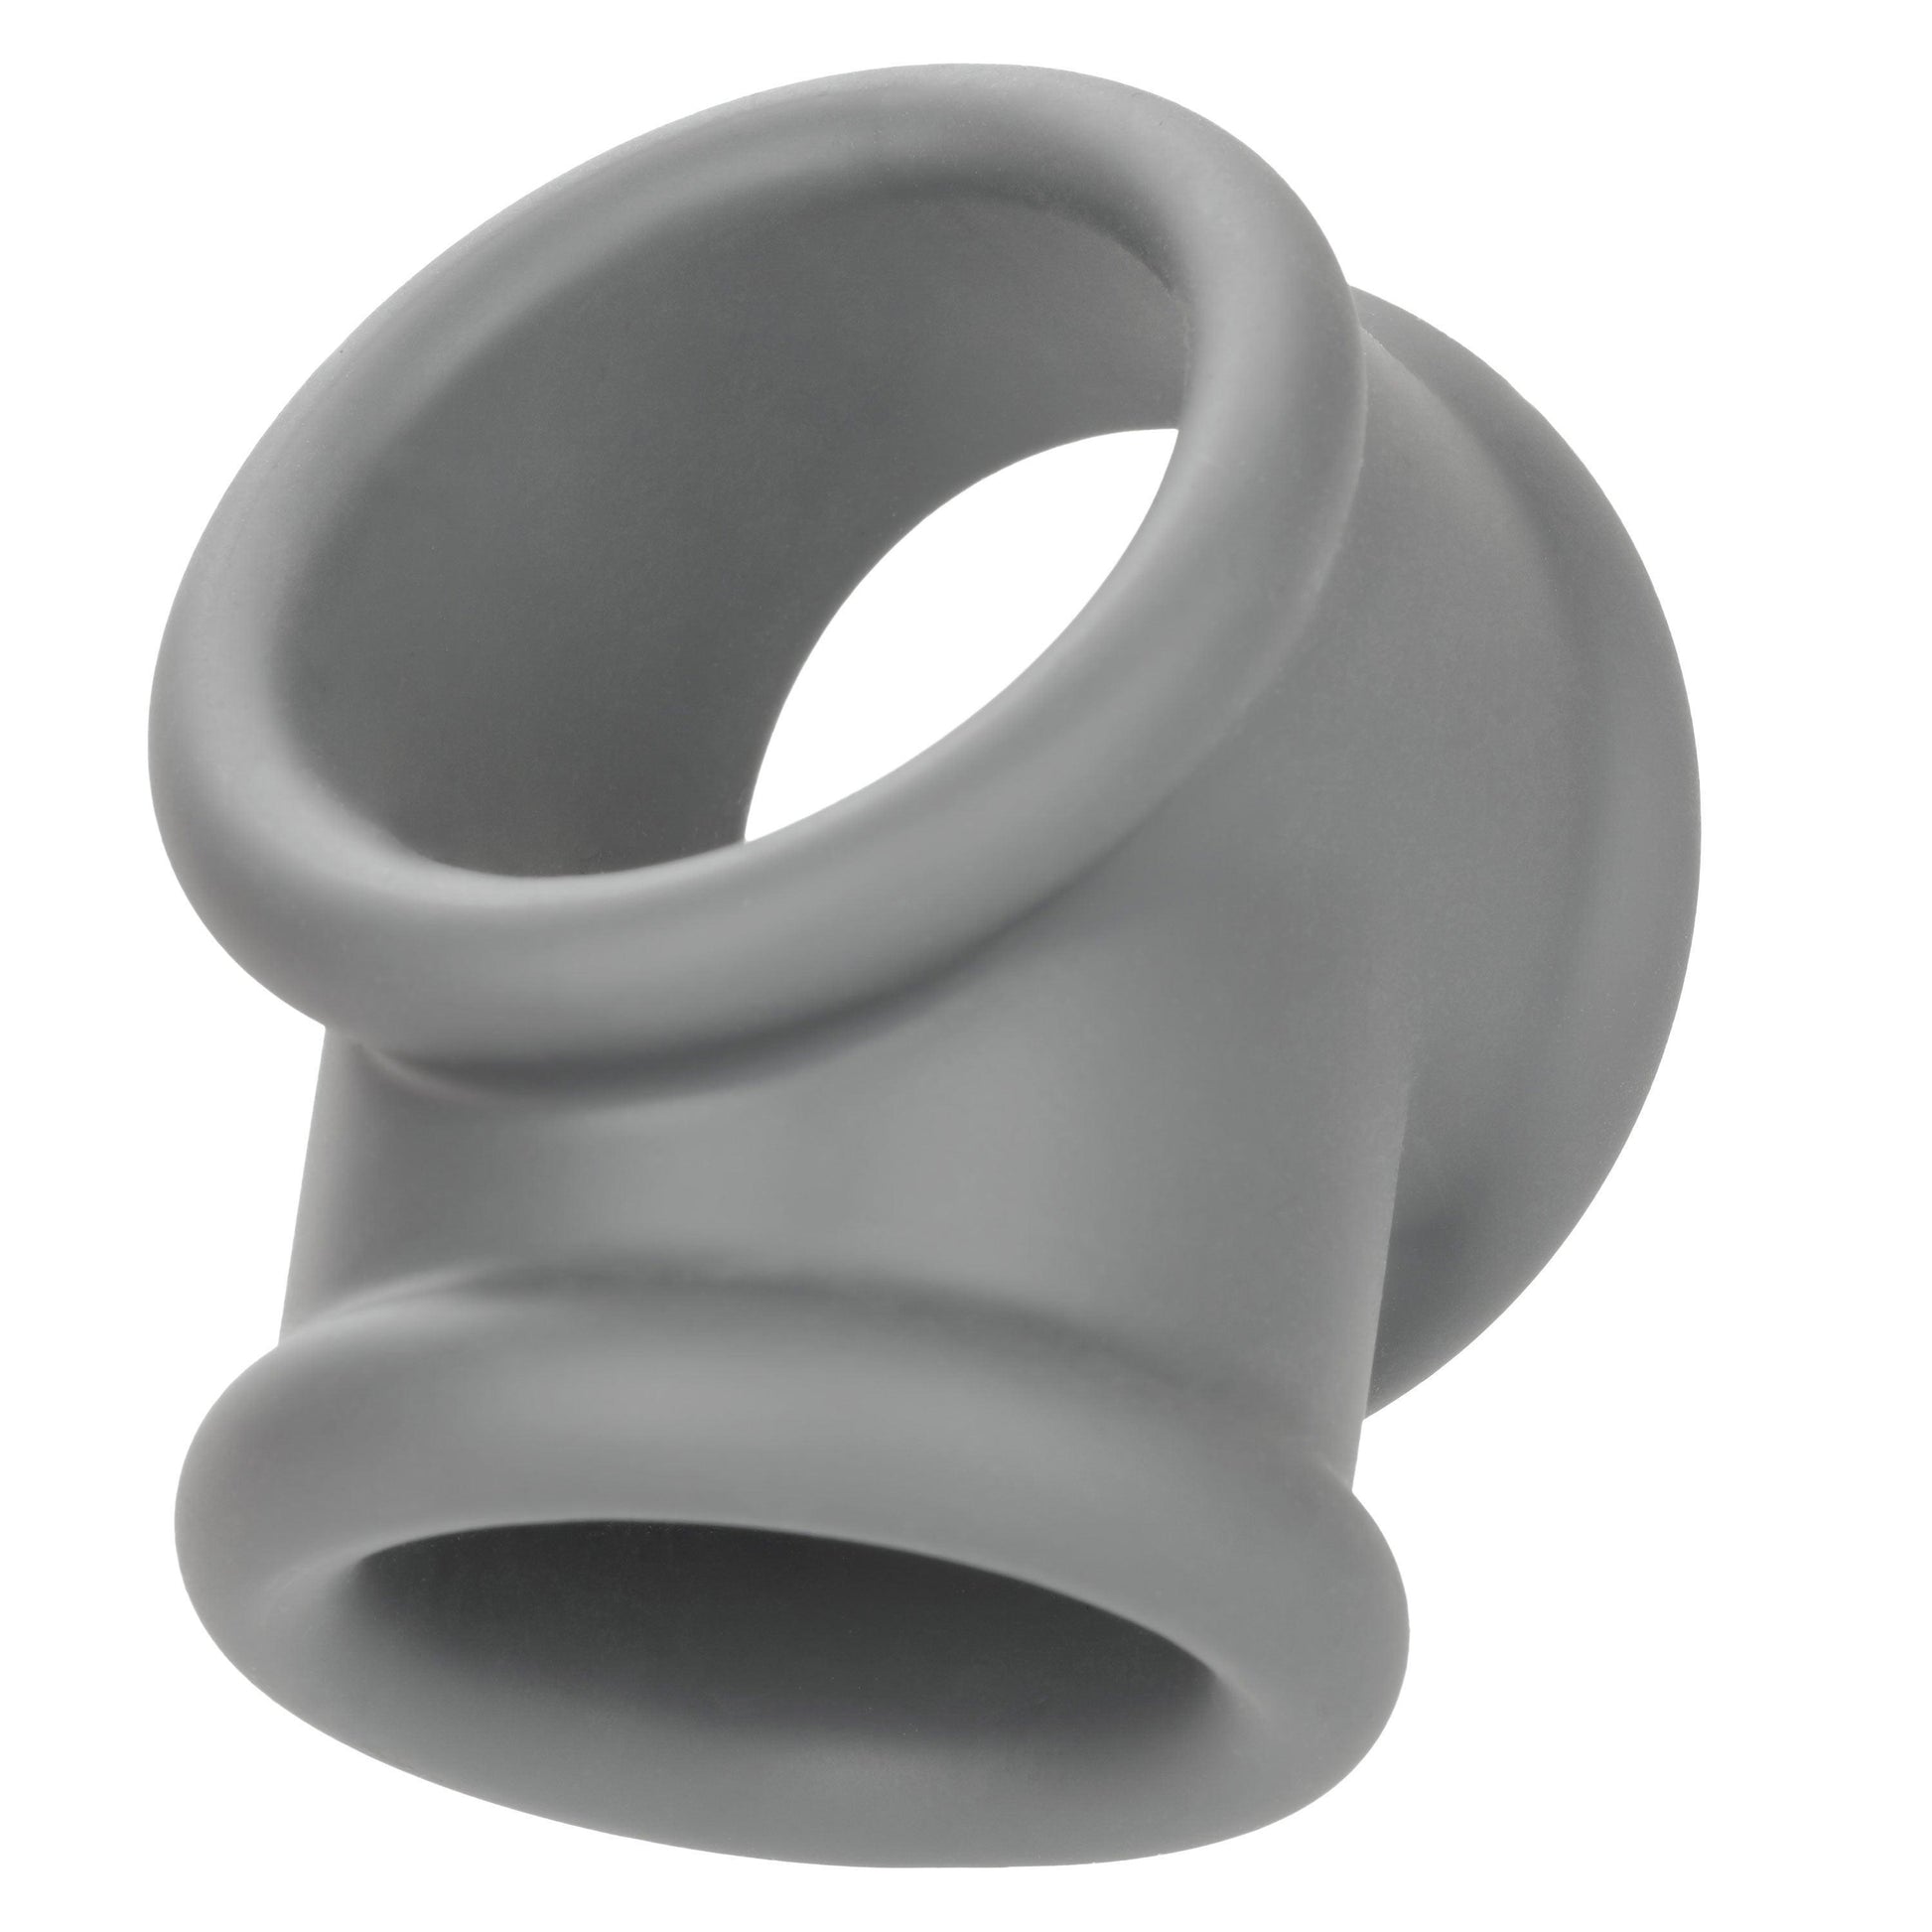 Alpha Liquid Silicone Precision Ring - Gray - My Sex Toy Hub